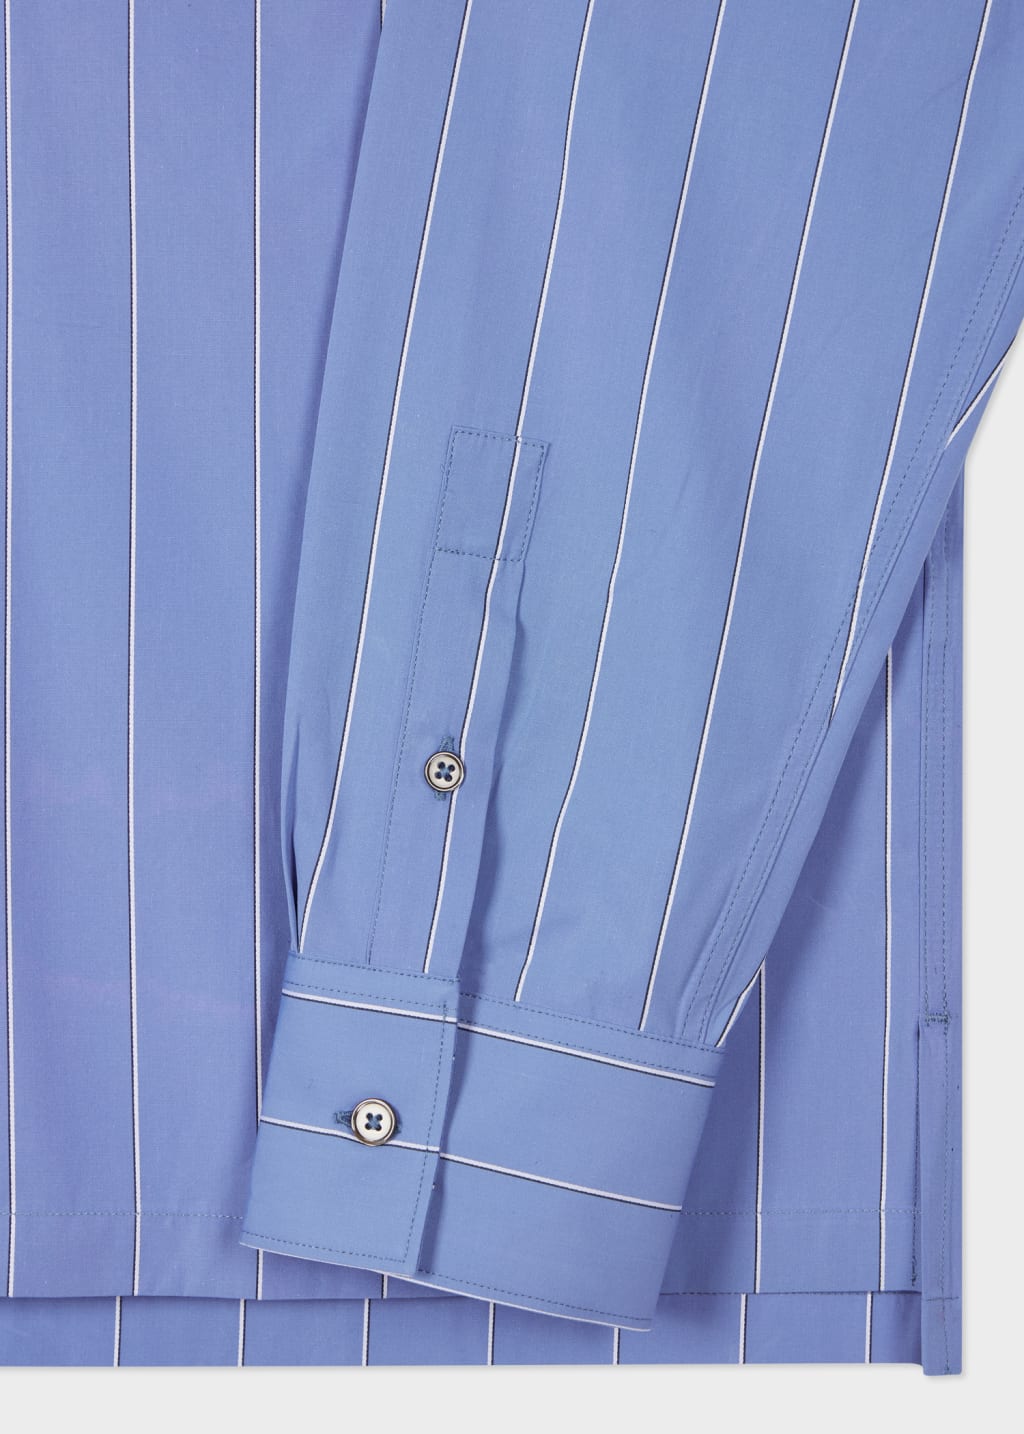 Front View - Blue Oversized Poplin Stripe Shirt Paul Smith